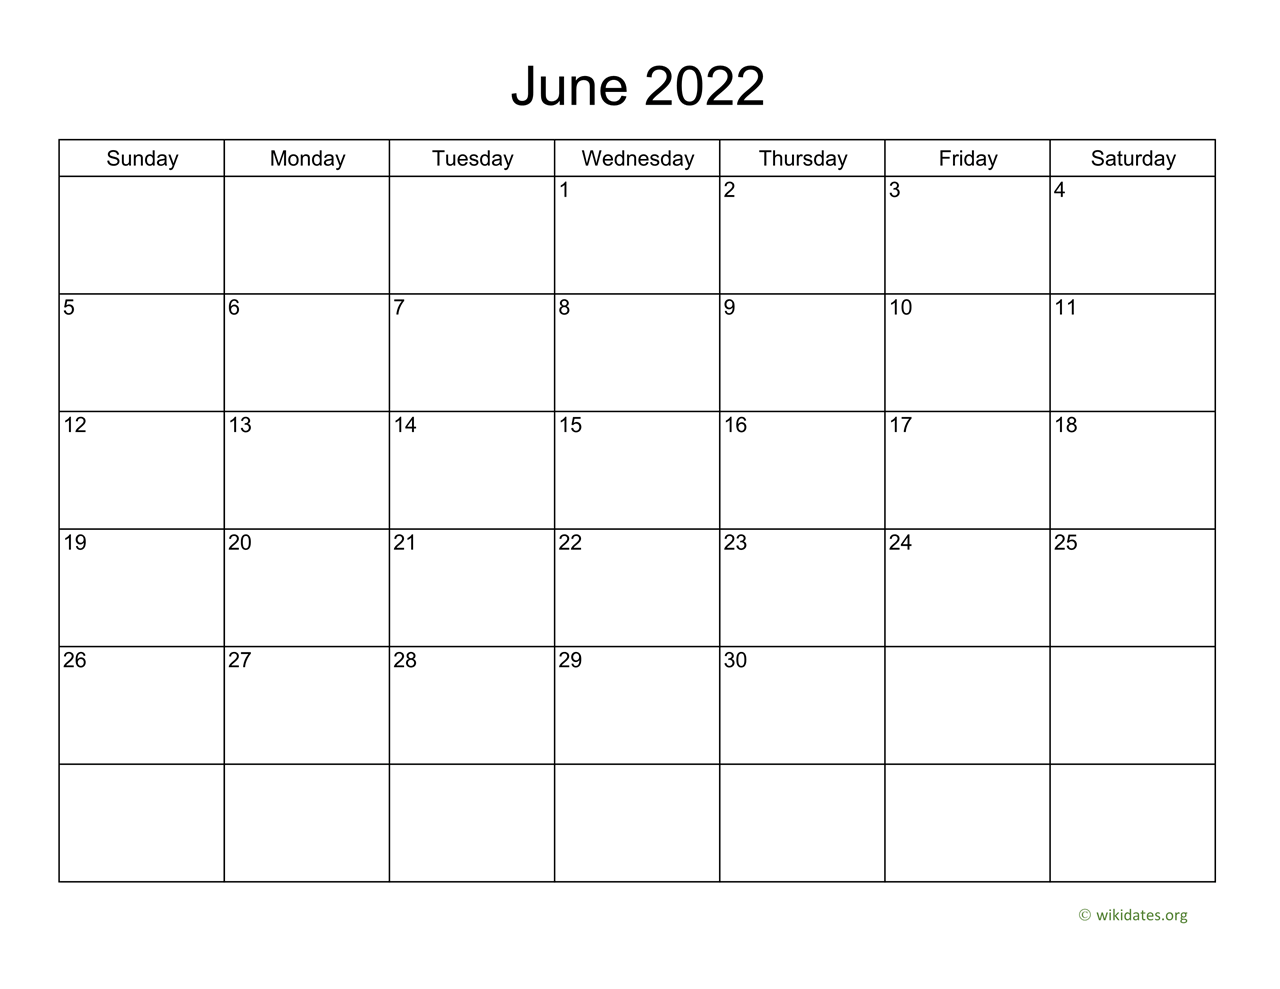 June 2022 Regents Schedule Basic Calendar For June 2022 | Wikidates.org